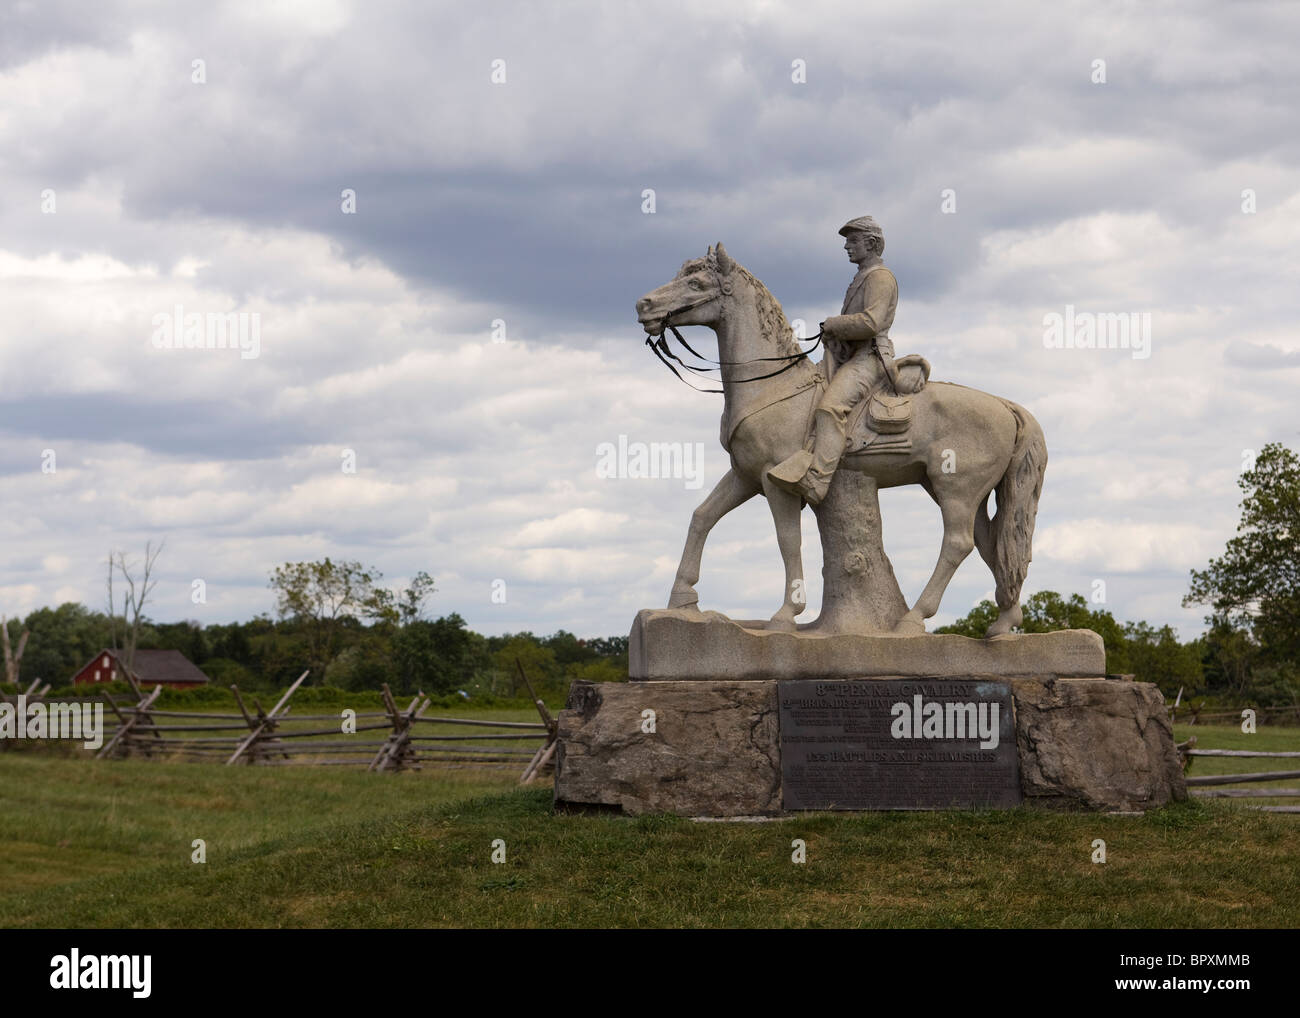 American Civil War monument Calvary soldier on horseback - Gettysburg, Pennsylvania, USA Stock Photo